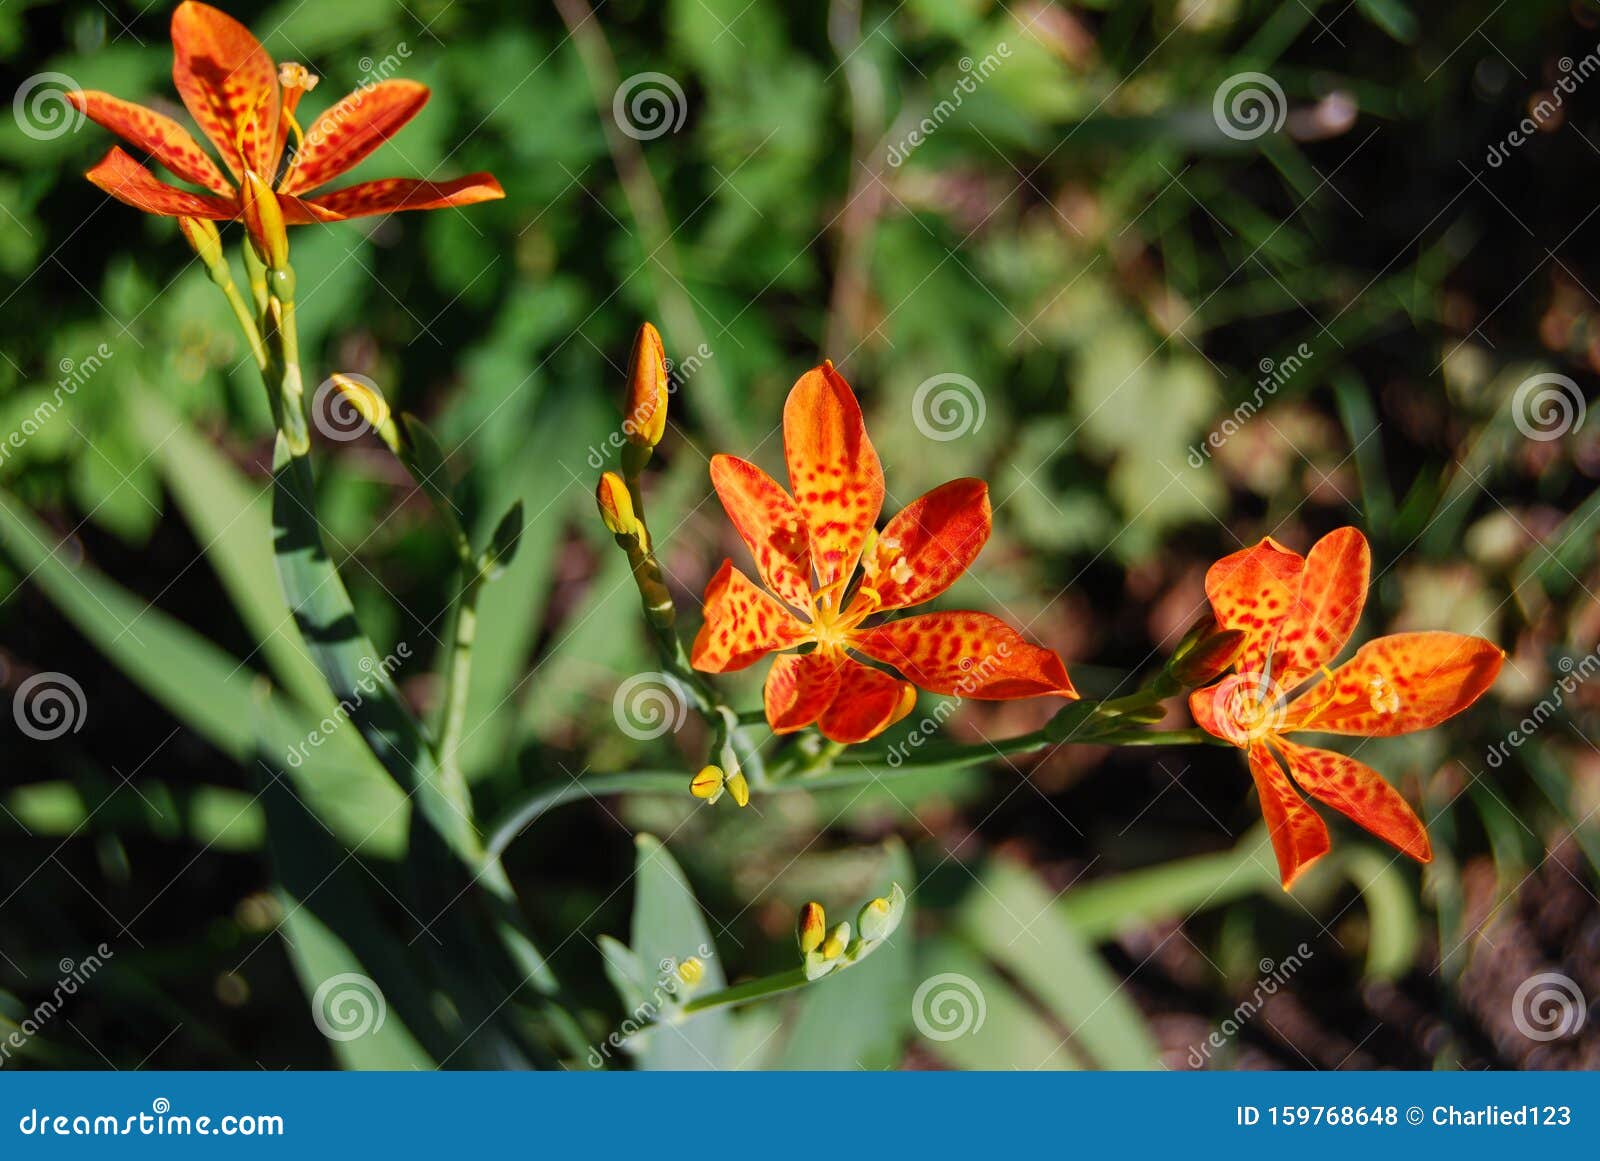 three yellow and orange tiger lilies